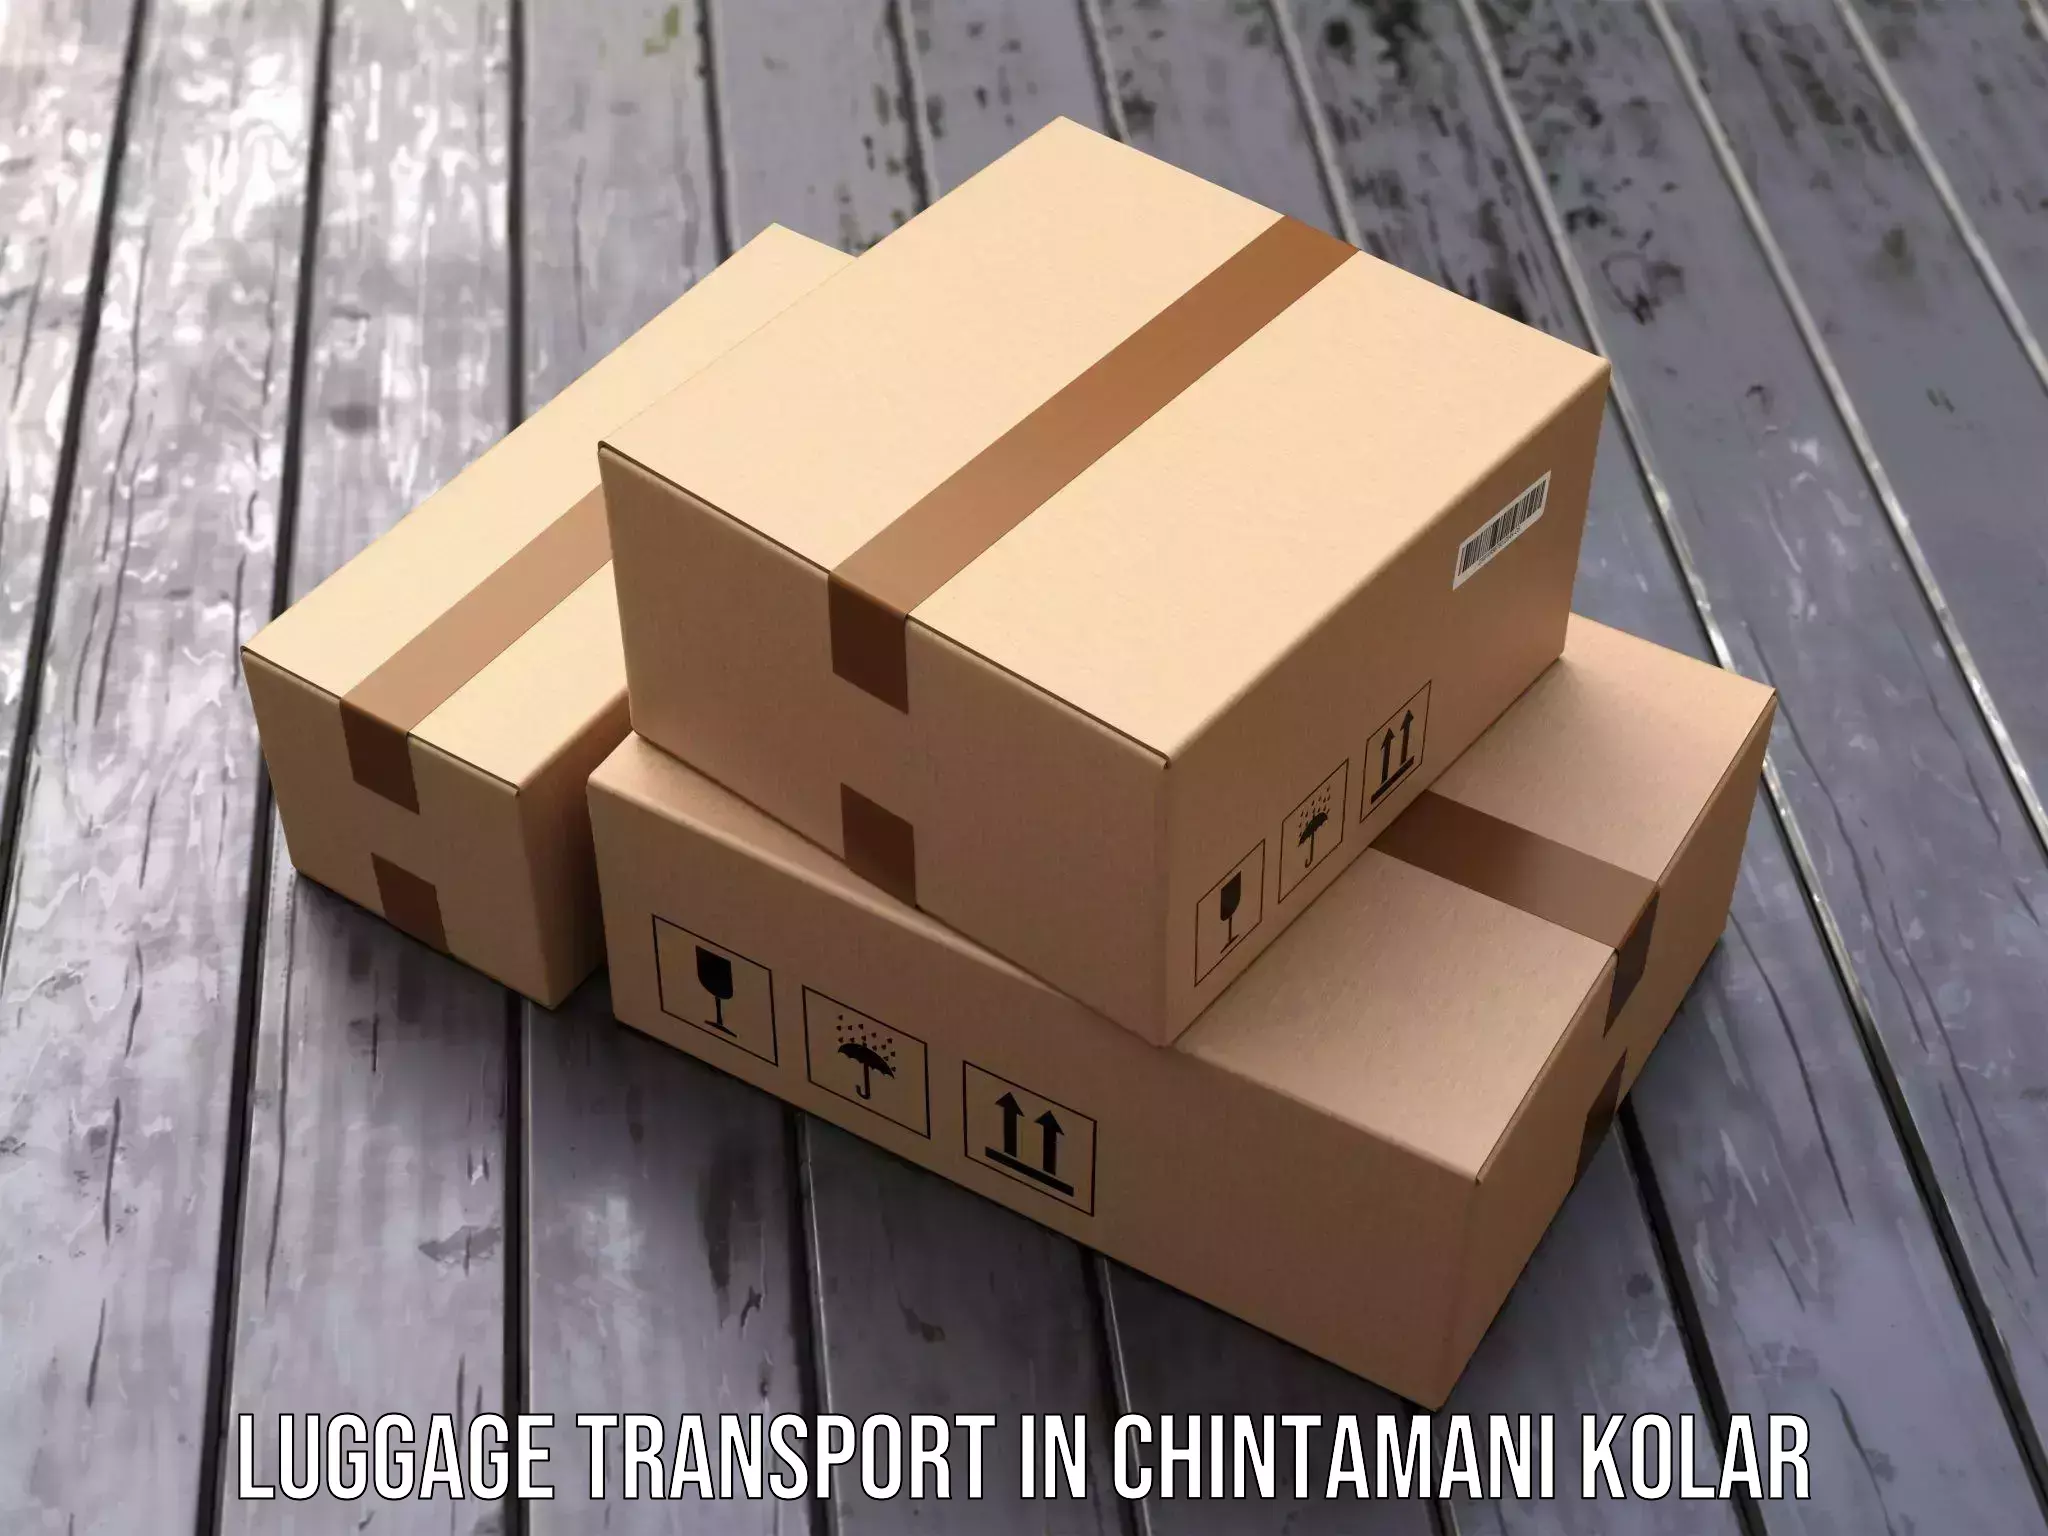 Luggage delivery app in Chintamani Kolar